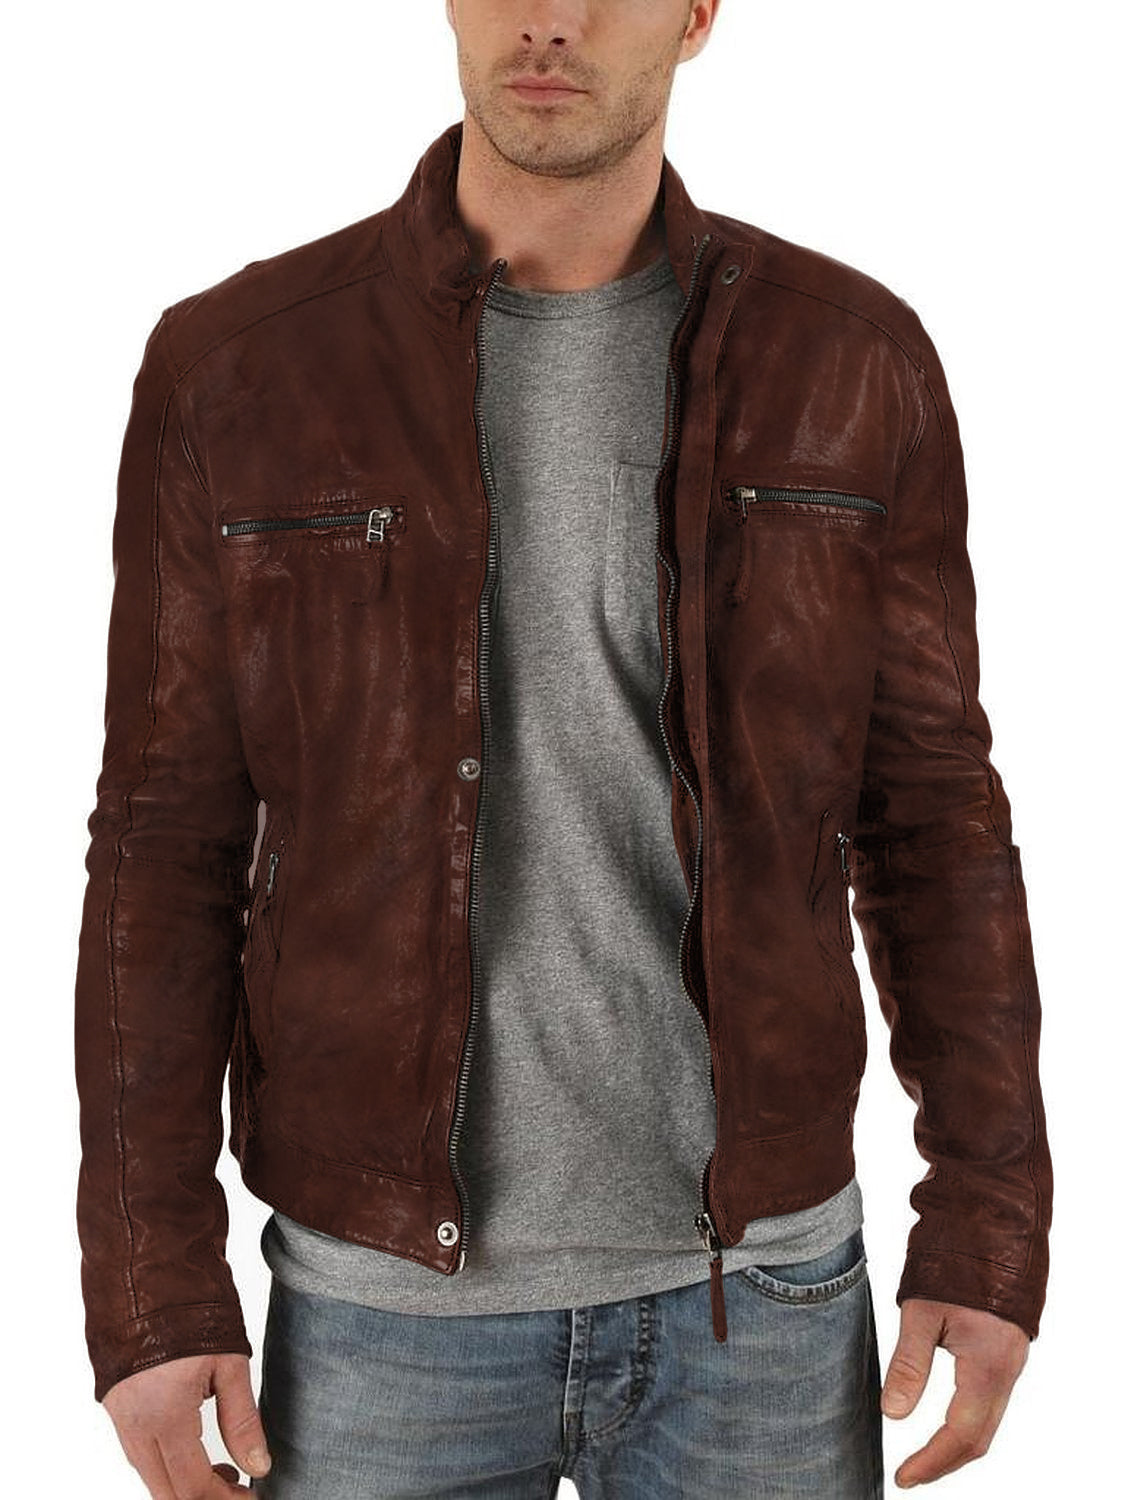 Leather Jackets Hub Mens Genuine Lambskin Leather Jacket (Black, Racer Jacket) - 1501179